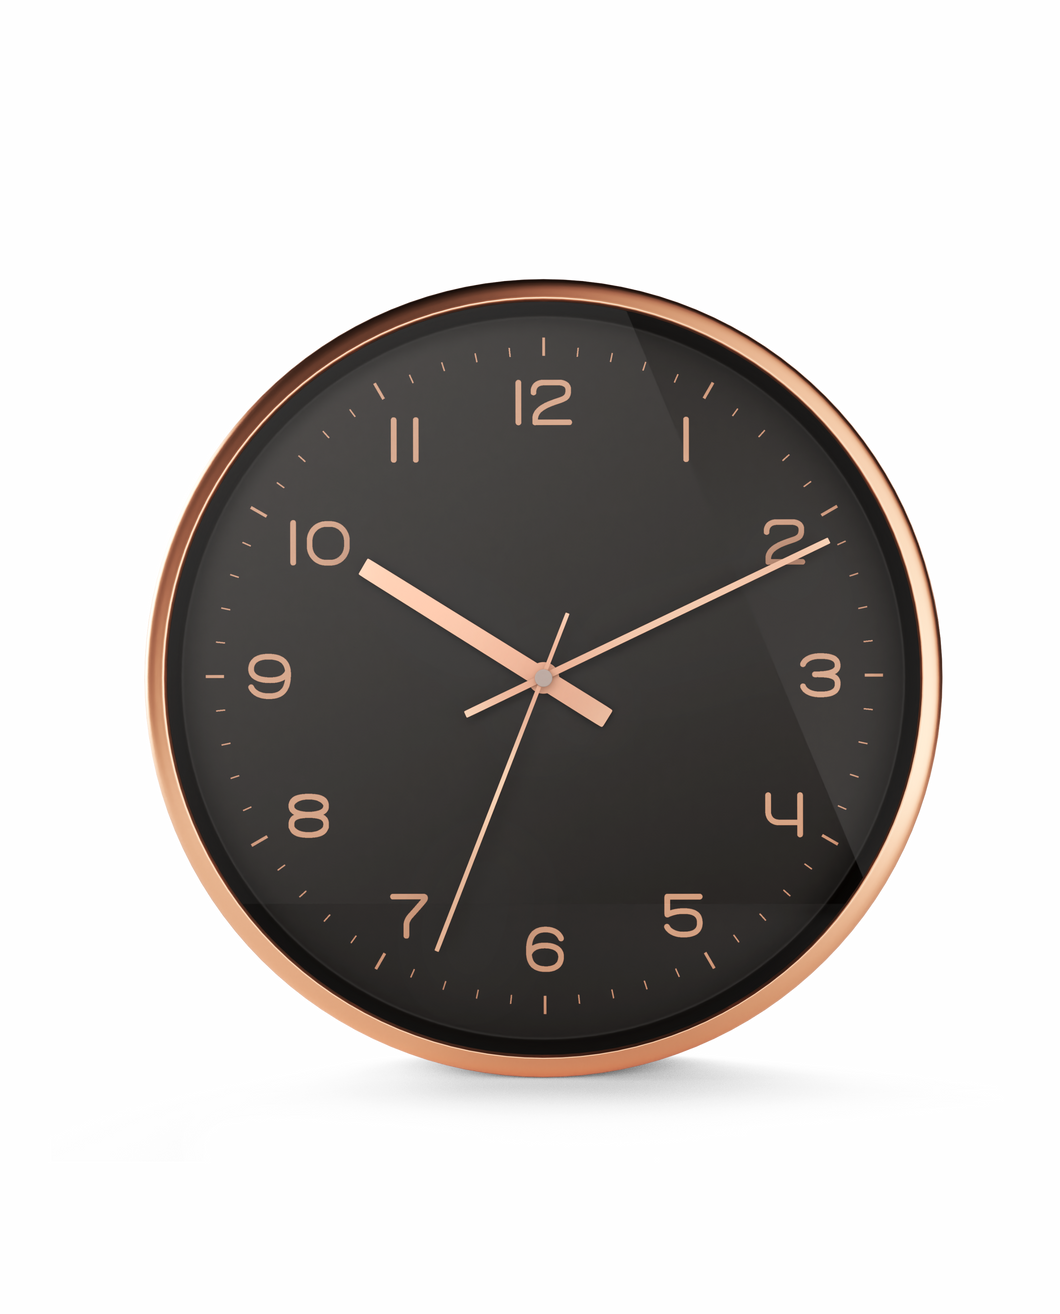 Driini Modern Black Rose Gold Aluminum Analog Wall Clock (12